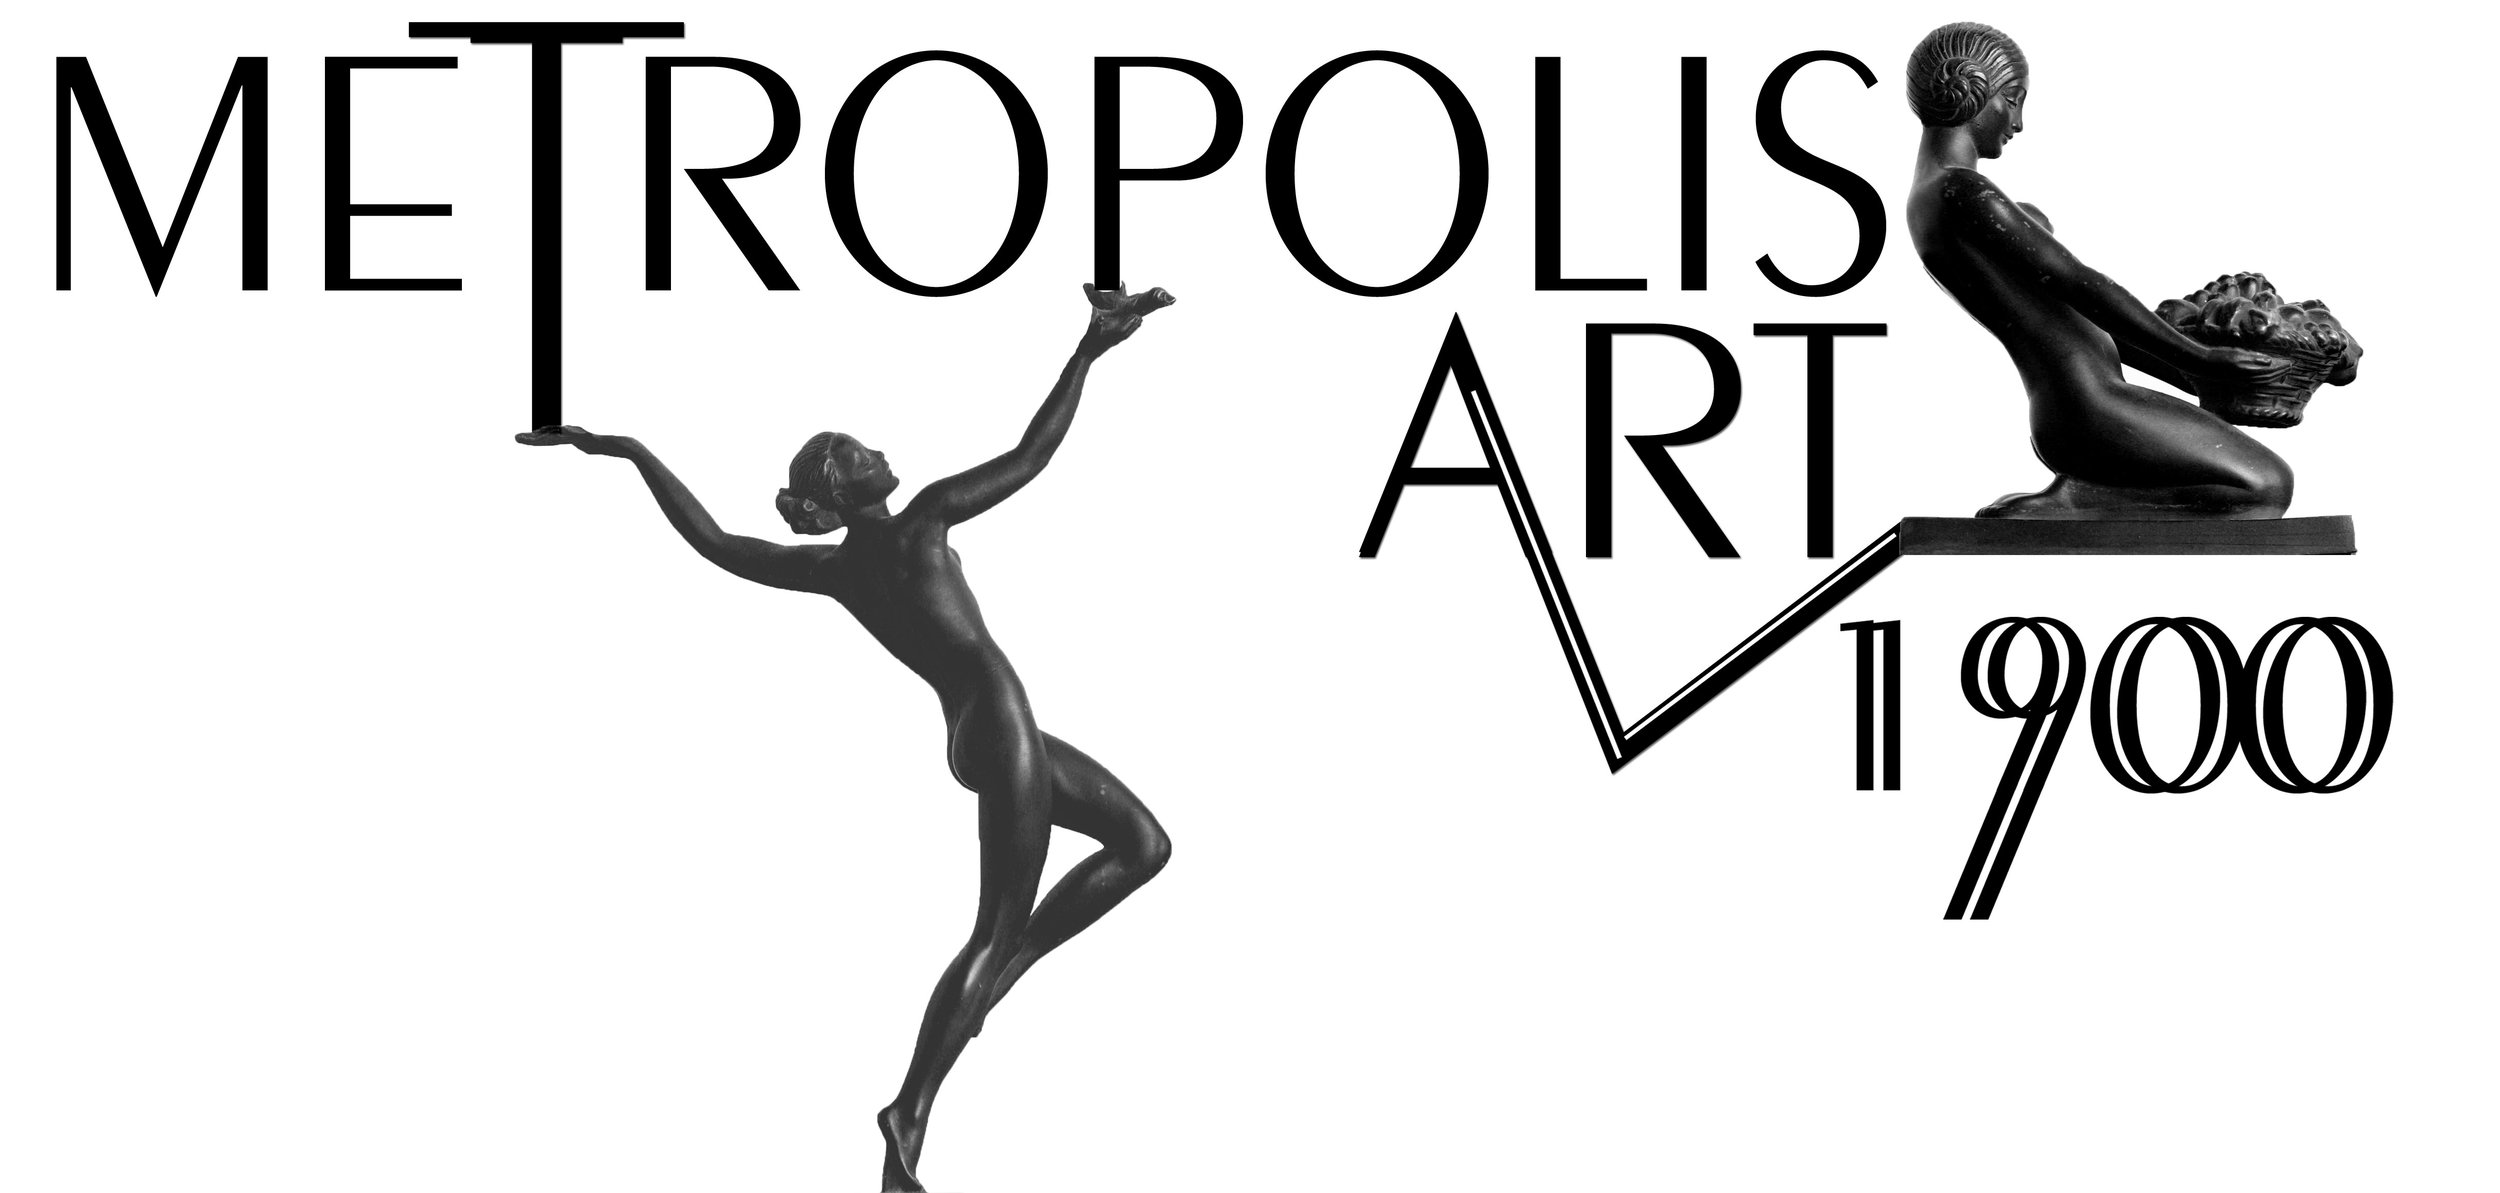 Logometropolisart2.jpg